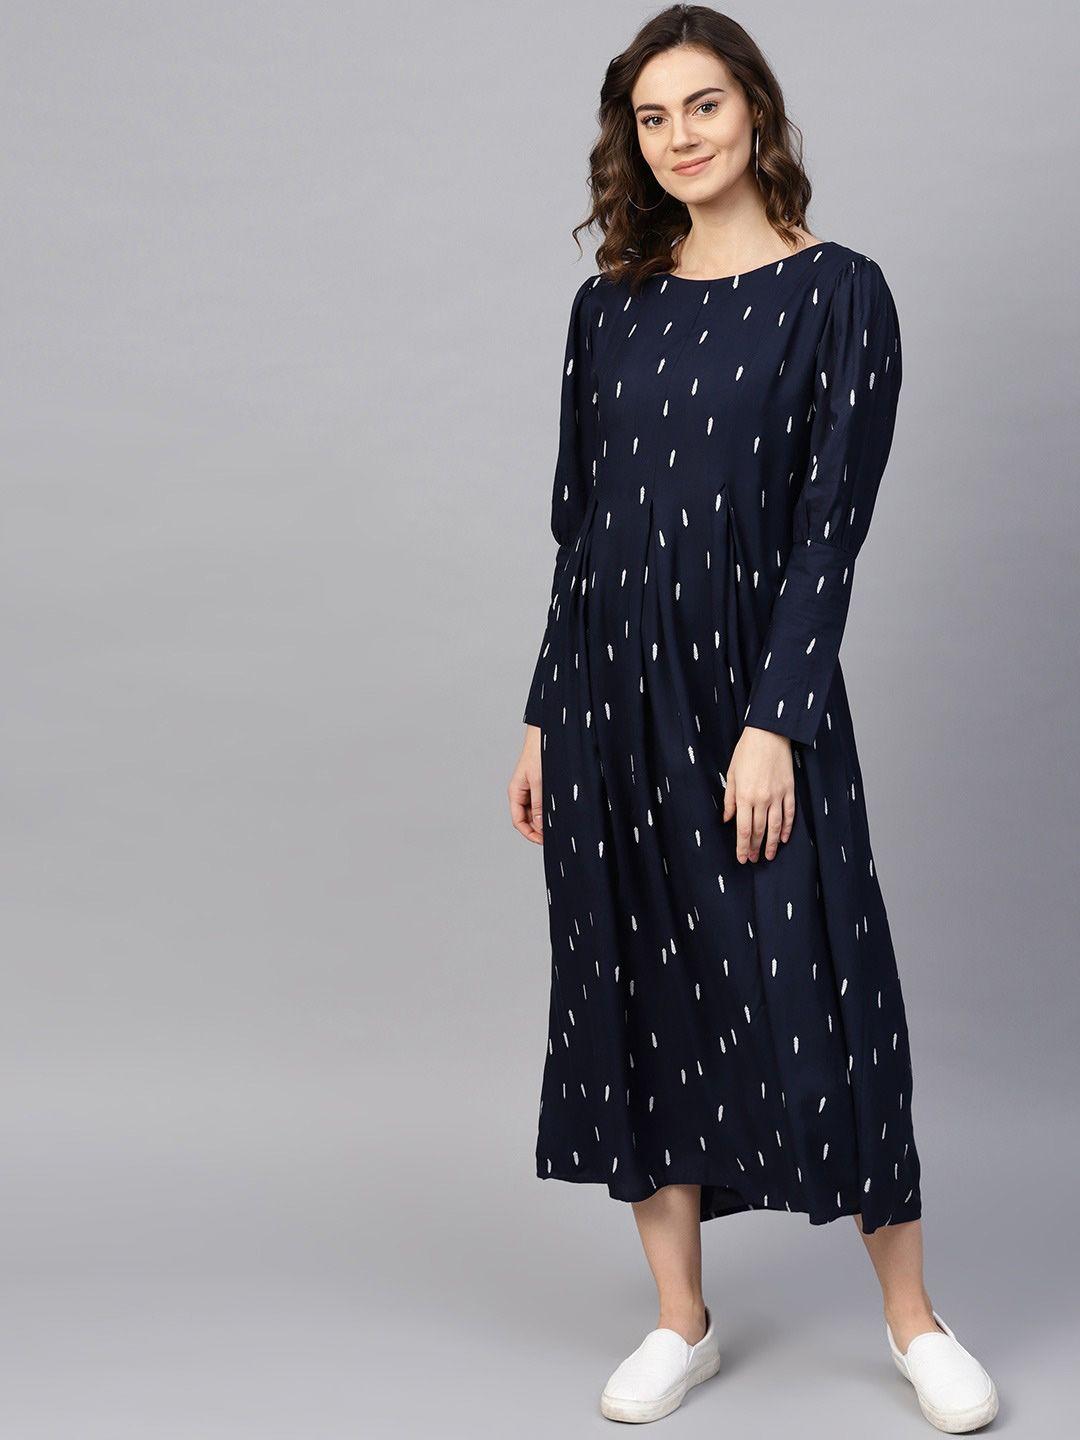 rare navy blue conversational printed cuffed sleeve a-line midi dress